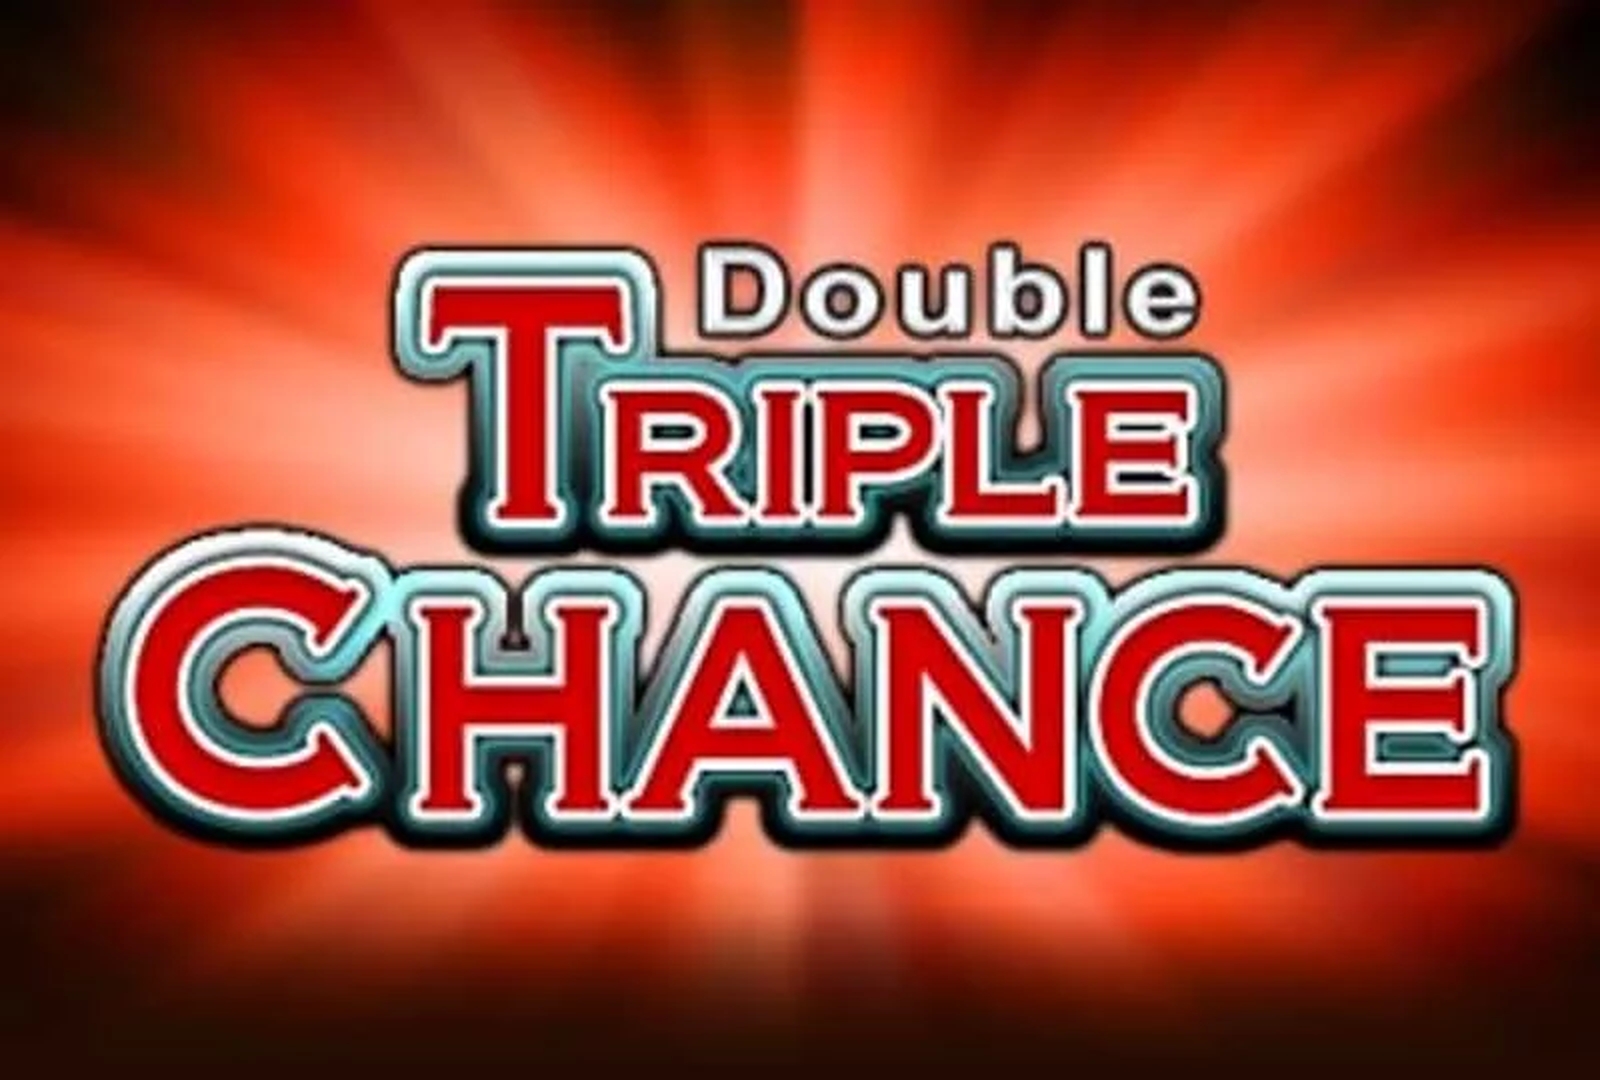 Double Triple Chance demo